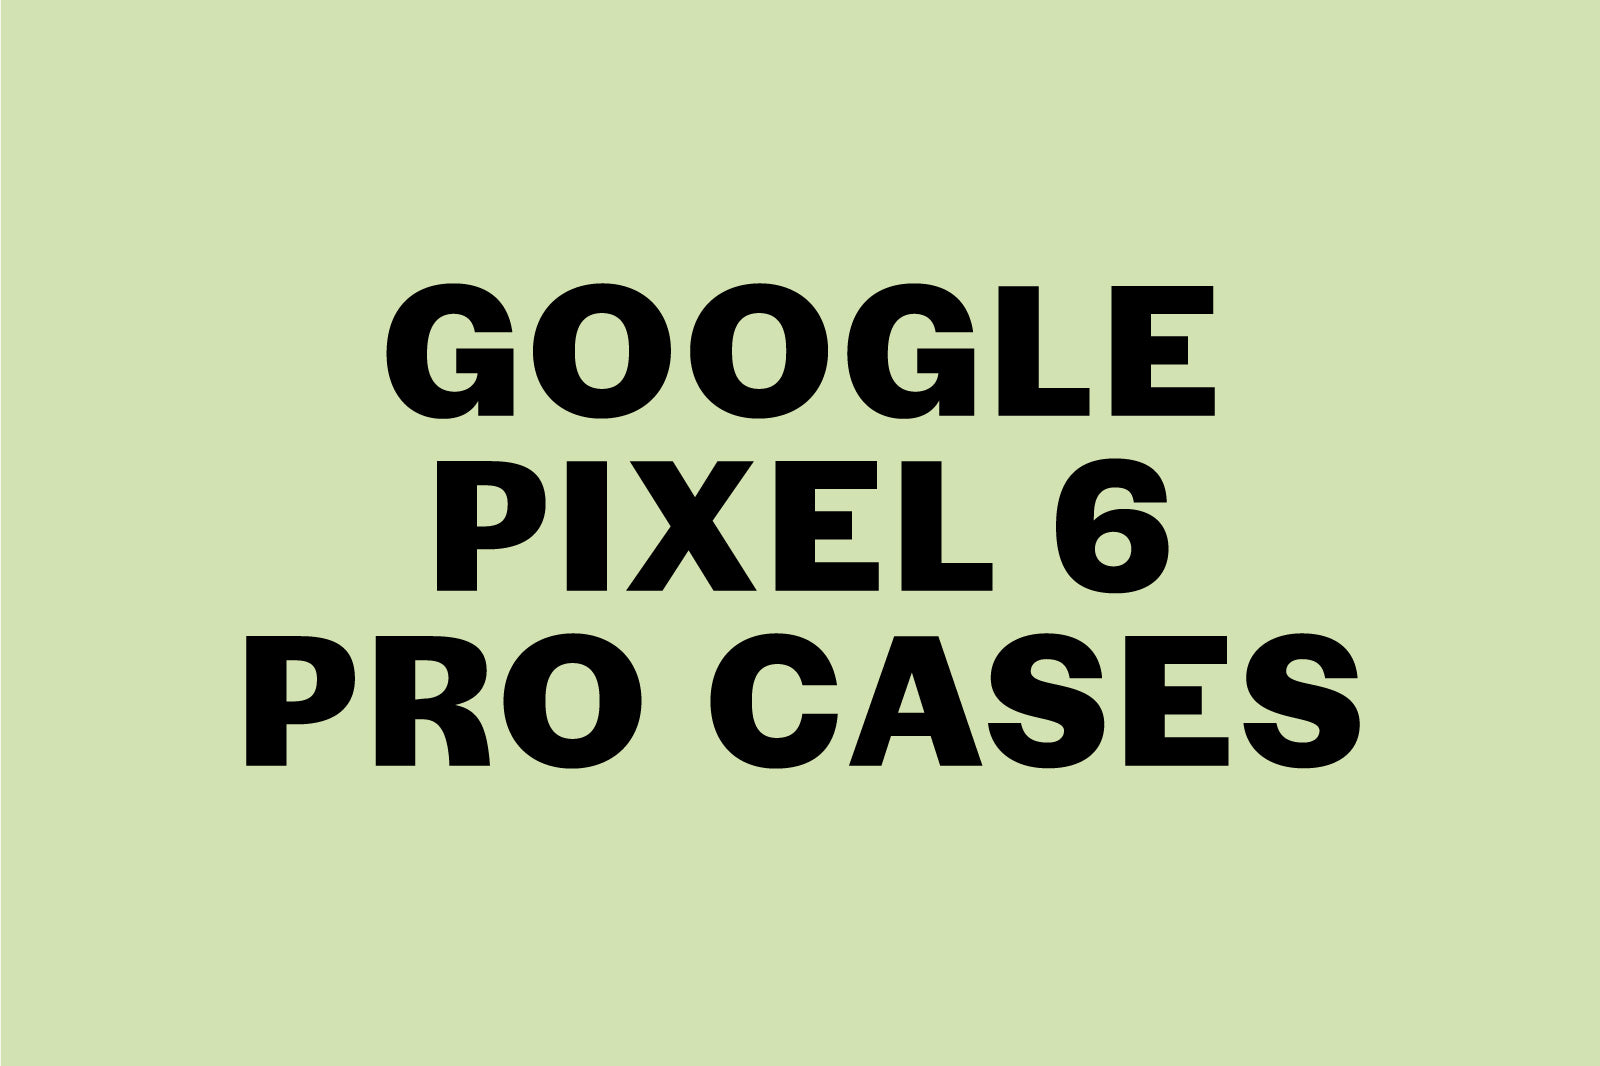 Google Pixel 6 Pro Cases